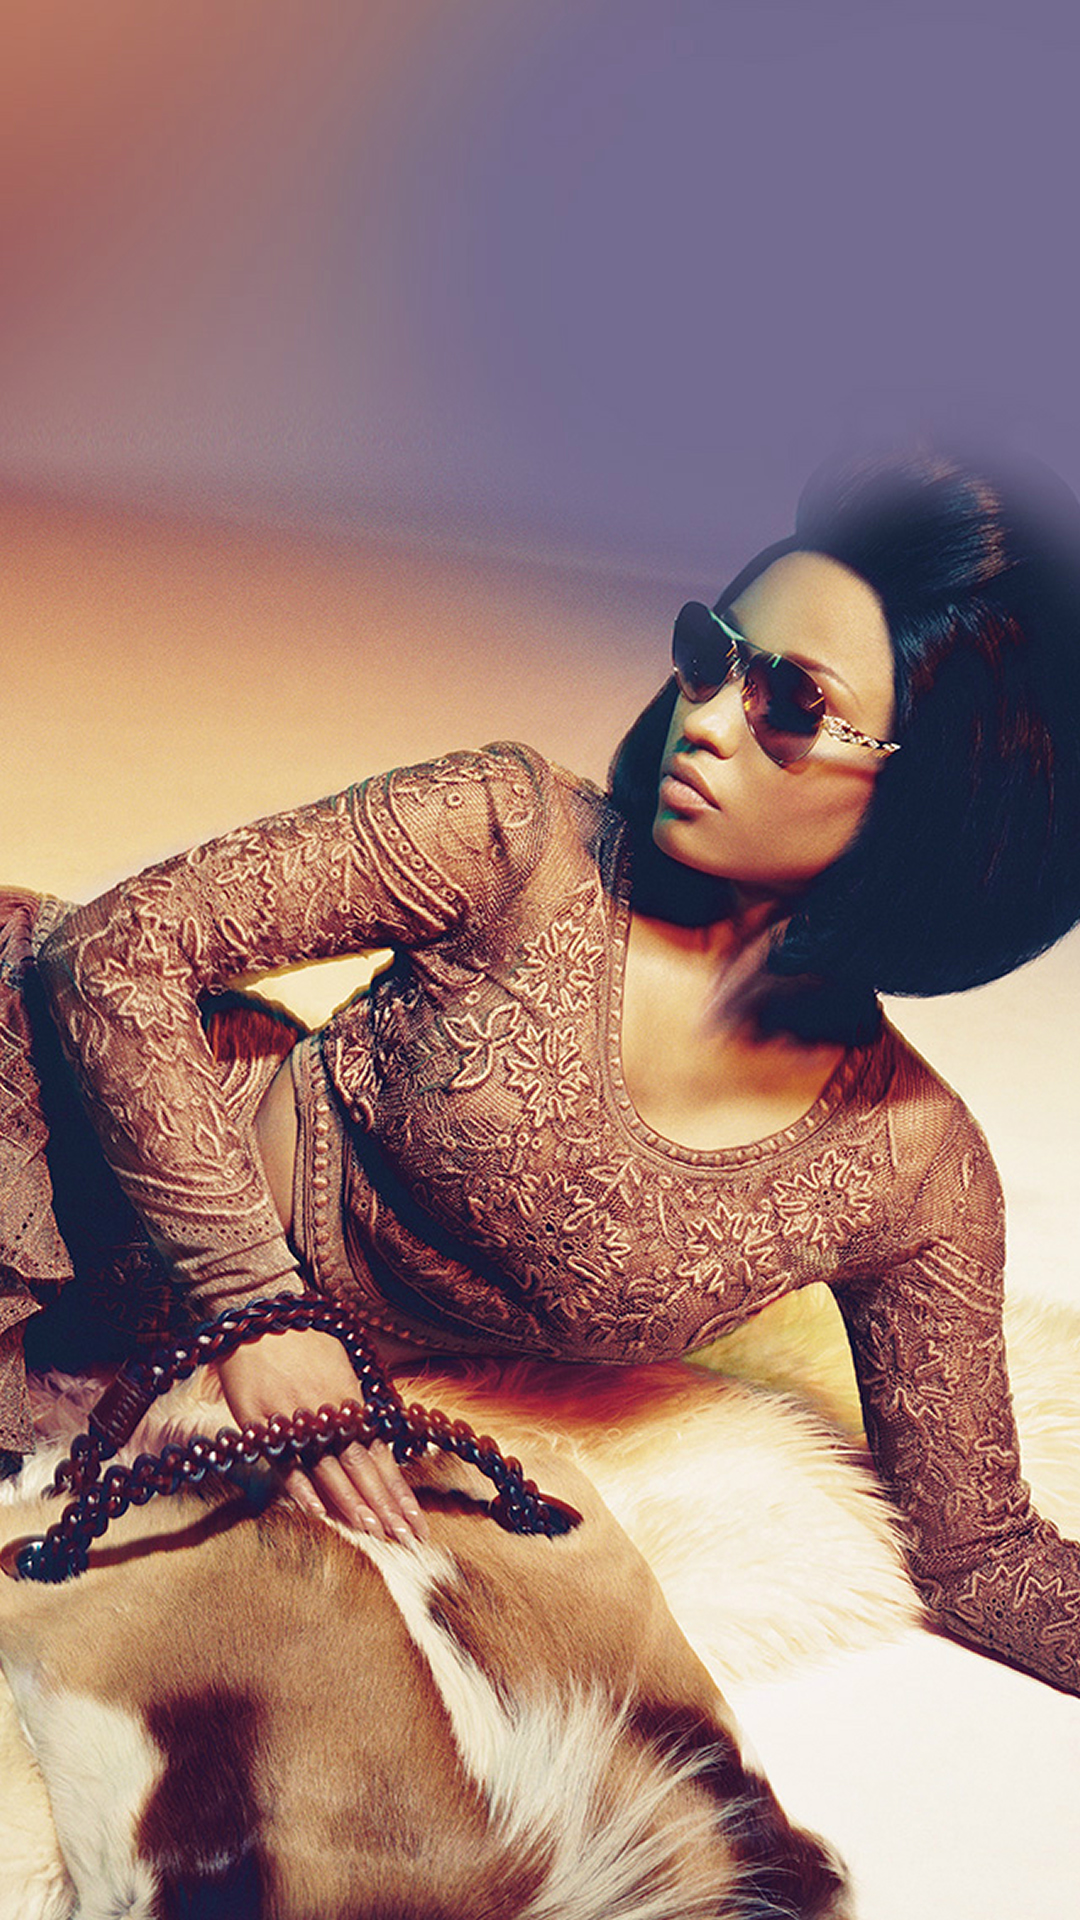 Nicki Minaj Girl Model Music Celebrity iPhone 8 Wallpaper